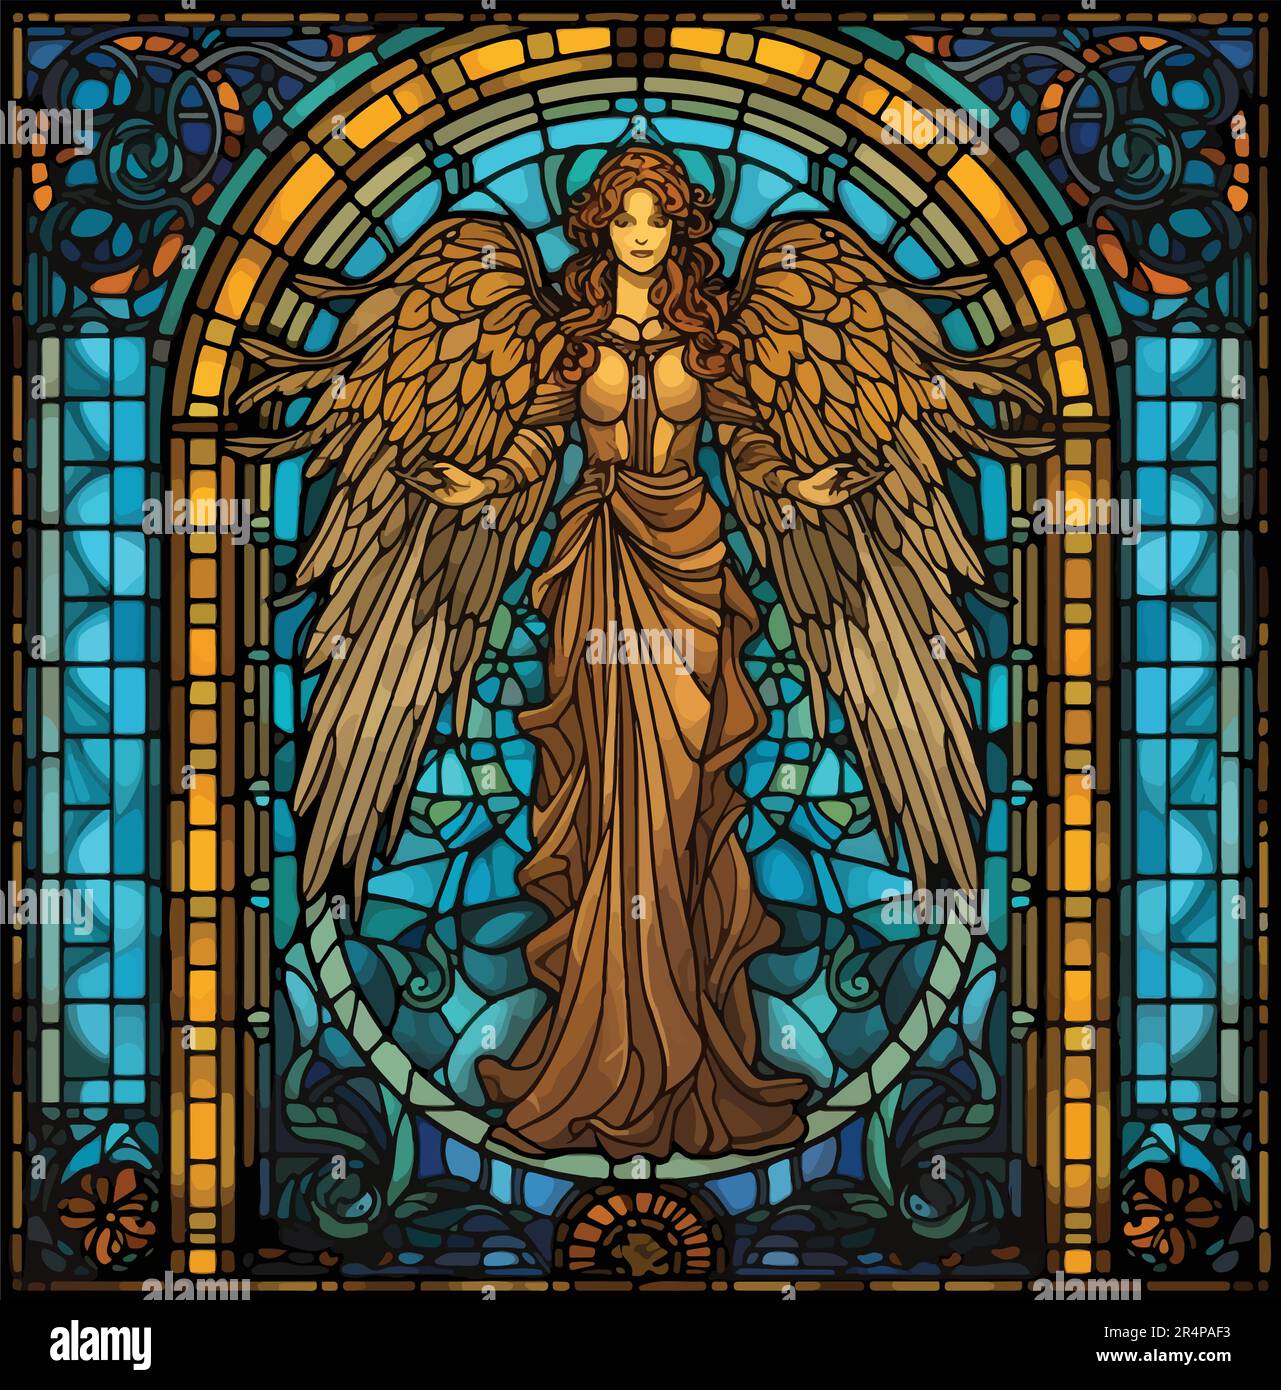 Buntglasfenster-Vektor - rechteckiges blau-goldenes Fenster mit Engel Stock Vektor